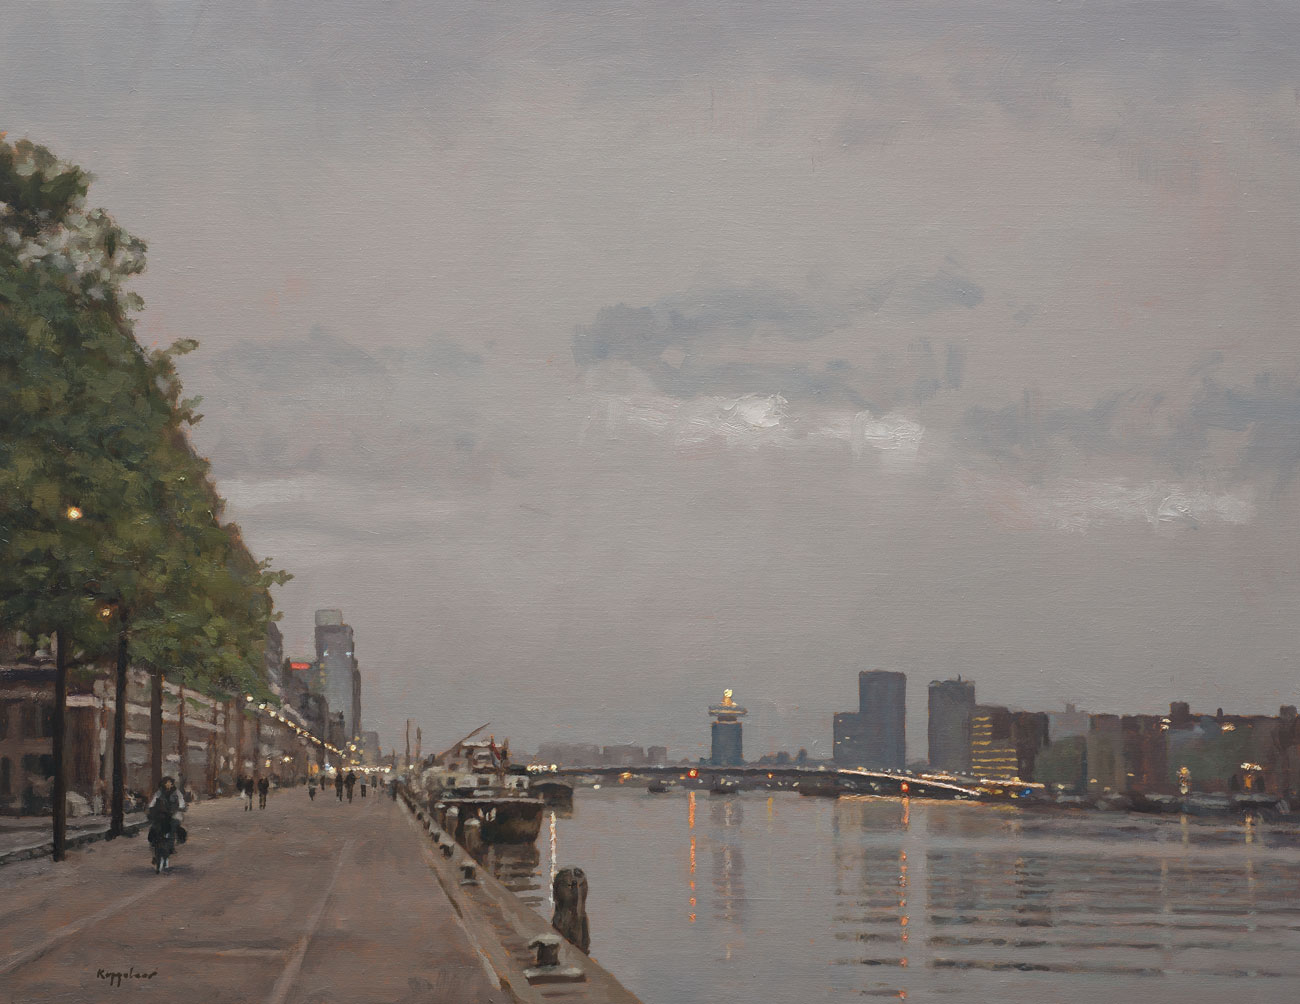 cityscape: 'Veemkade' oil on canvas by Dutch painter Frans Koppelaar.